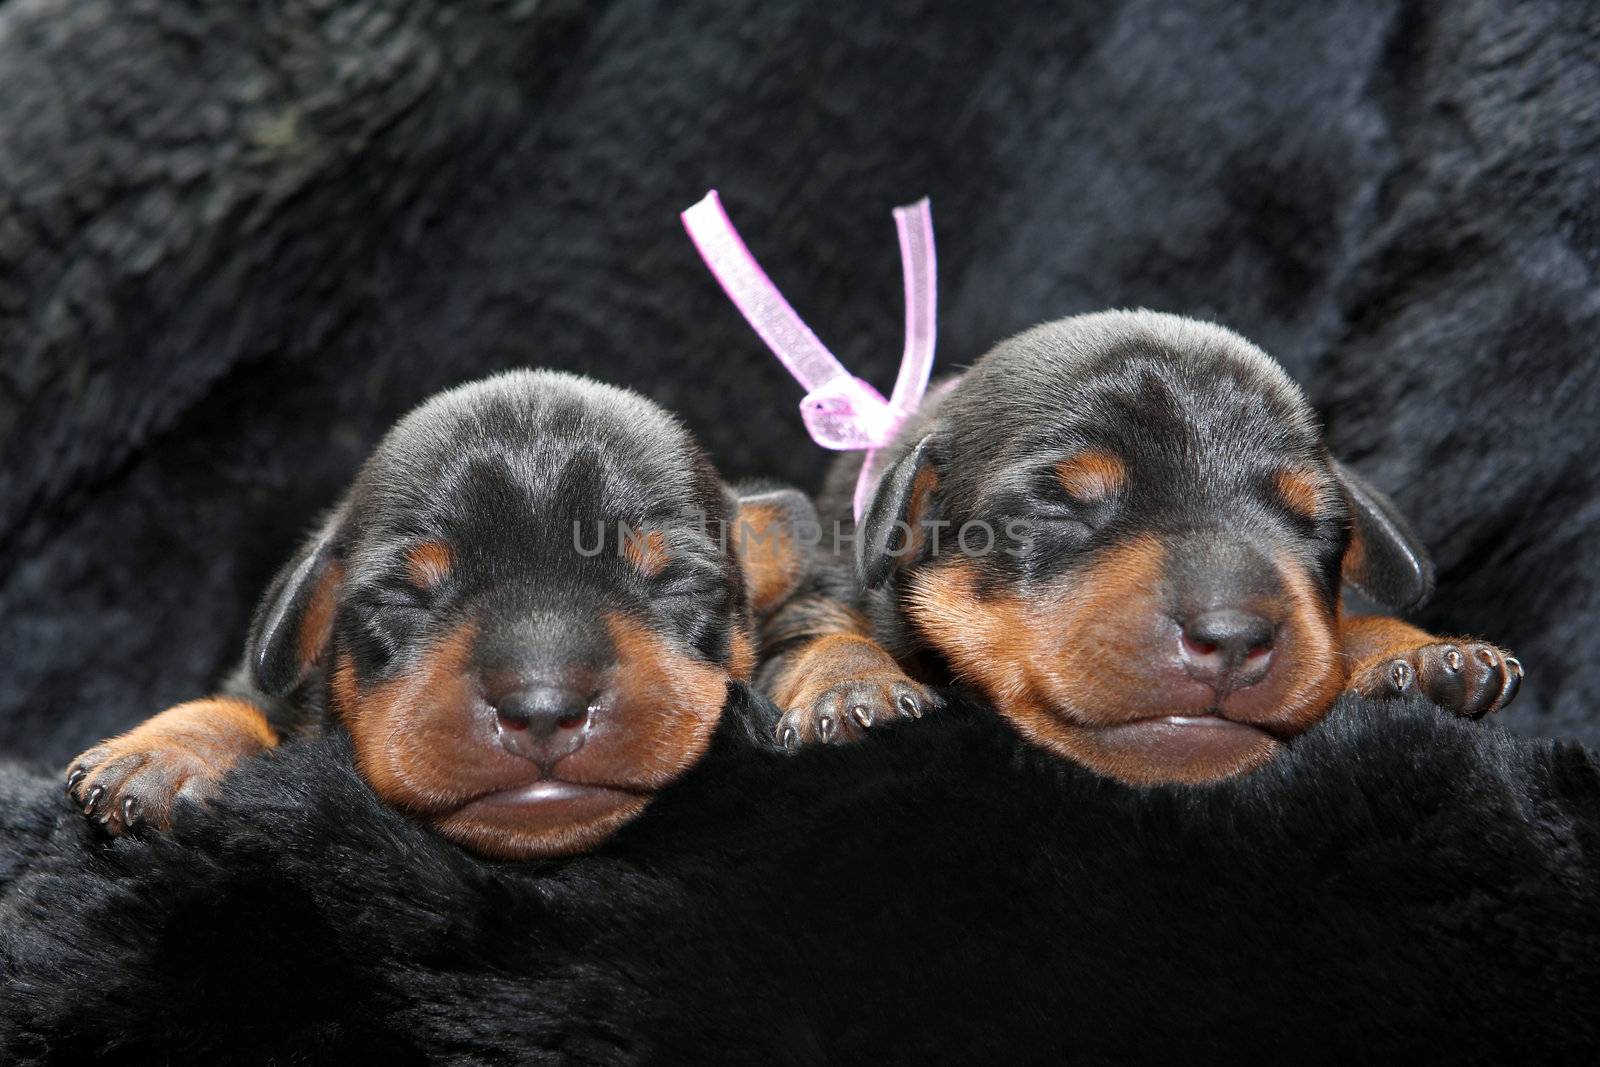 The Miniature Pinscher puppies, 5 days old